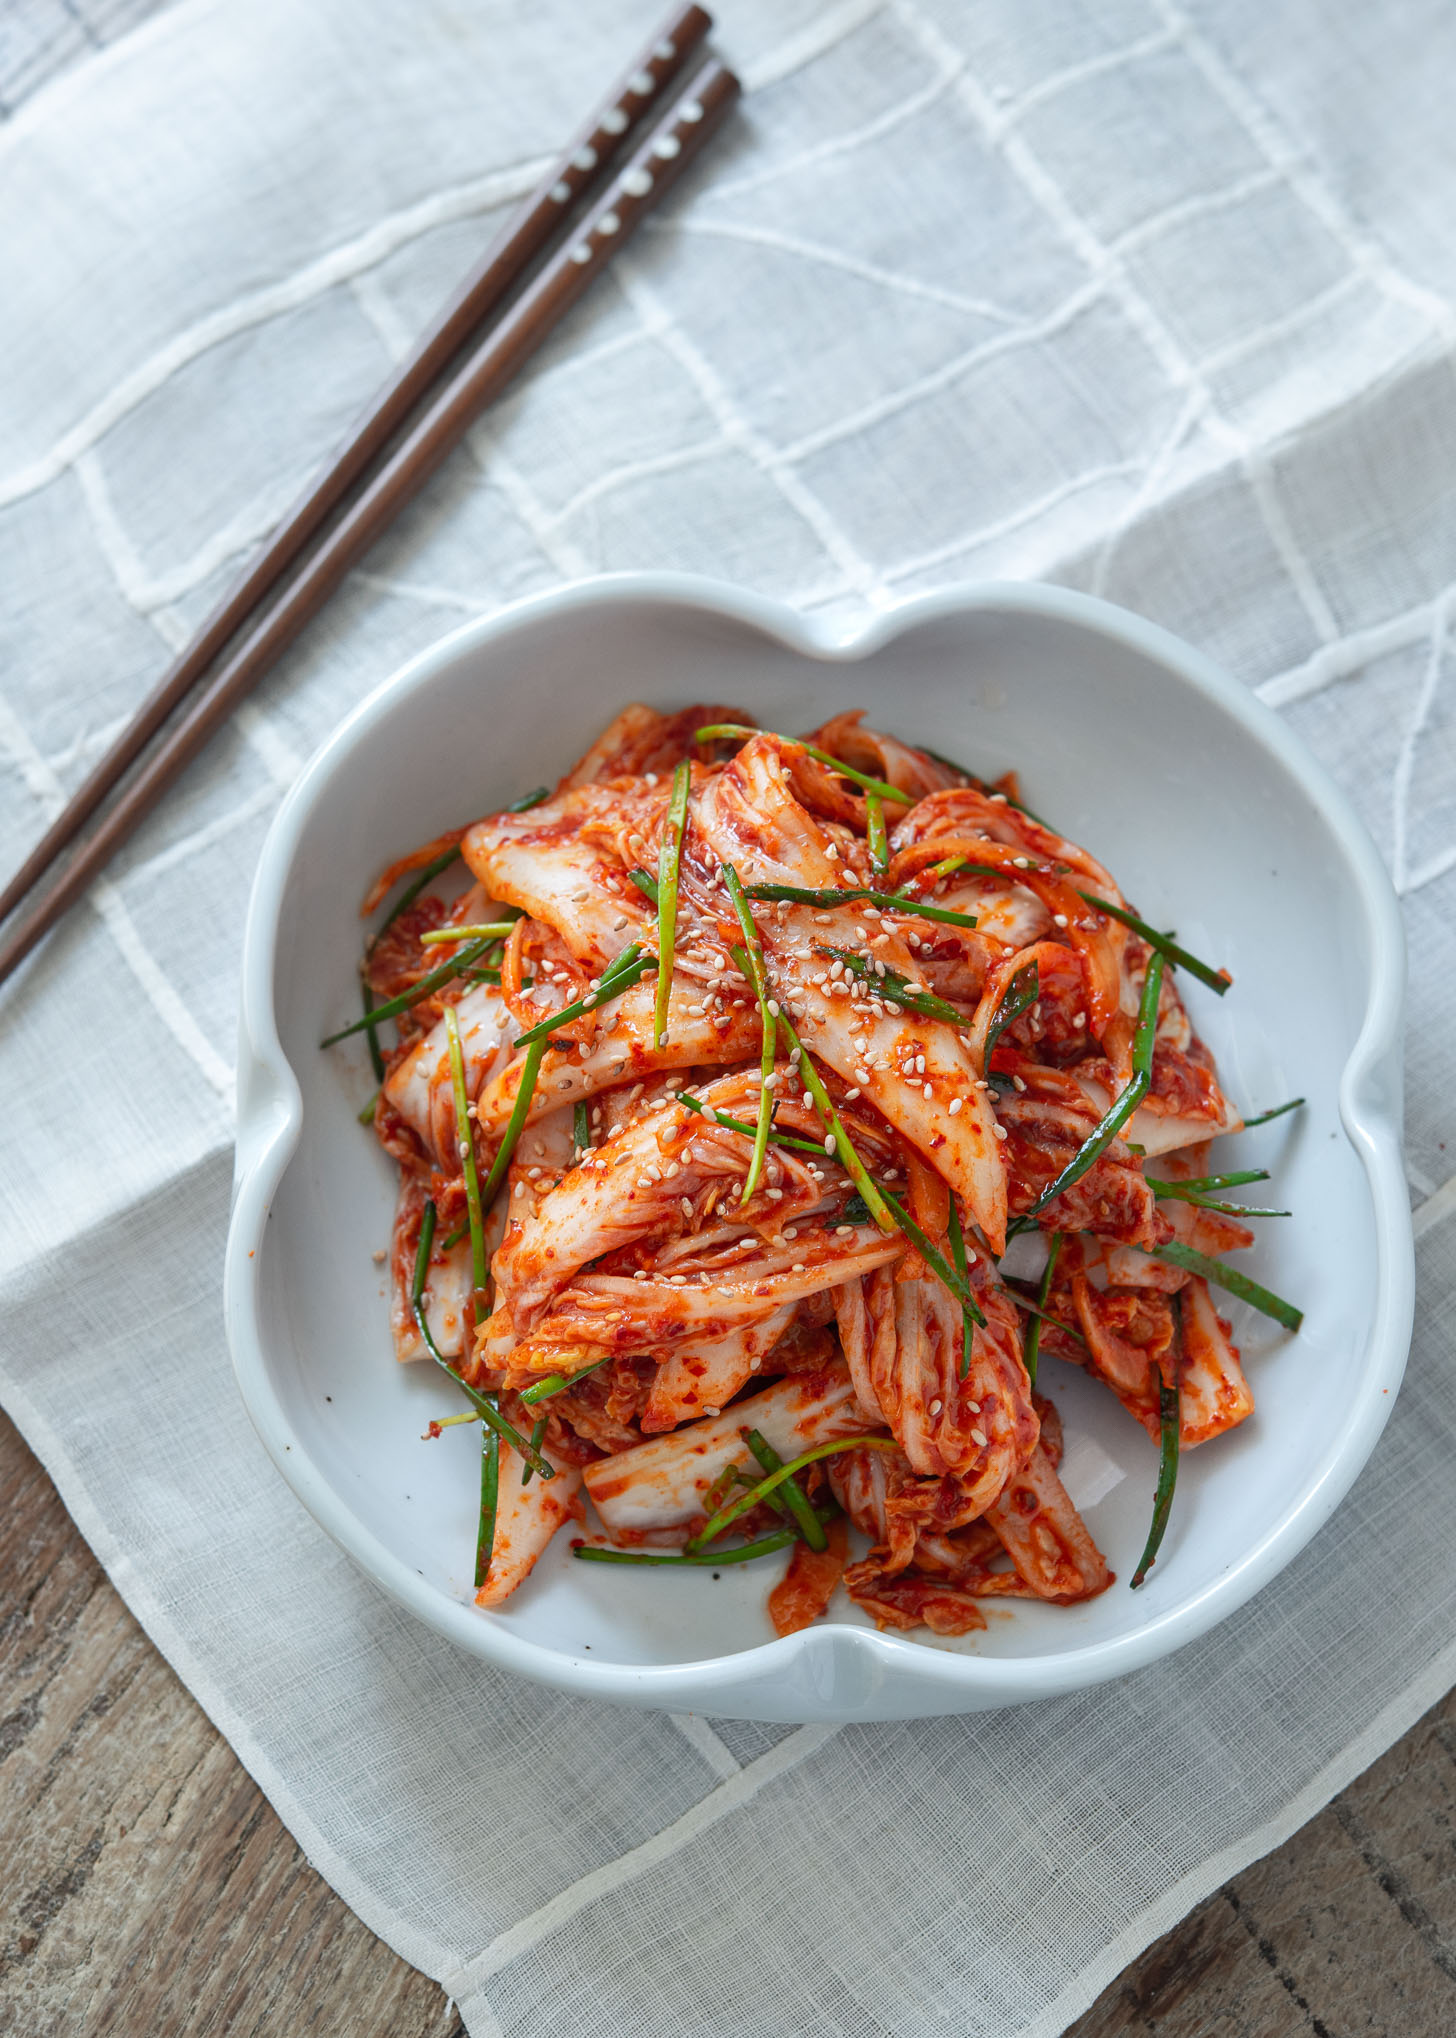 Geotjeori, Korean fresh kimchi salad served in a bowl.